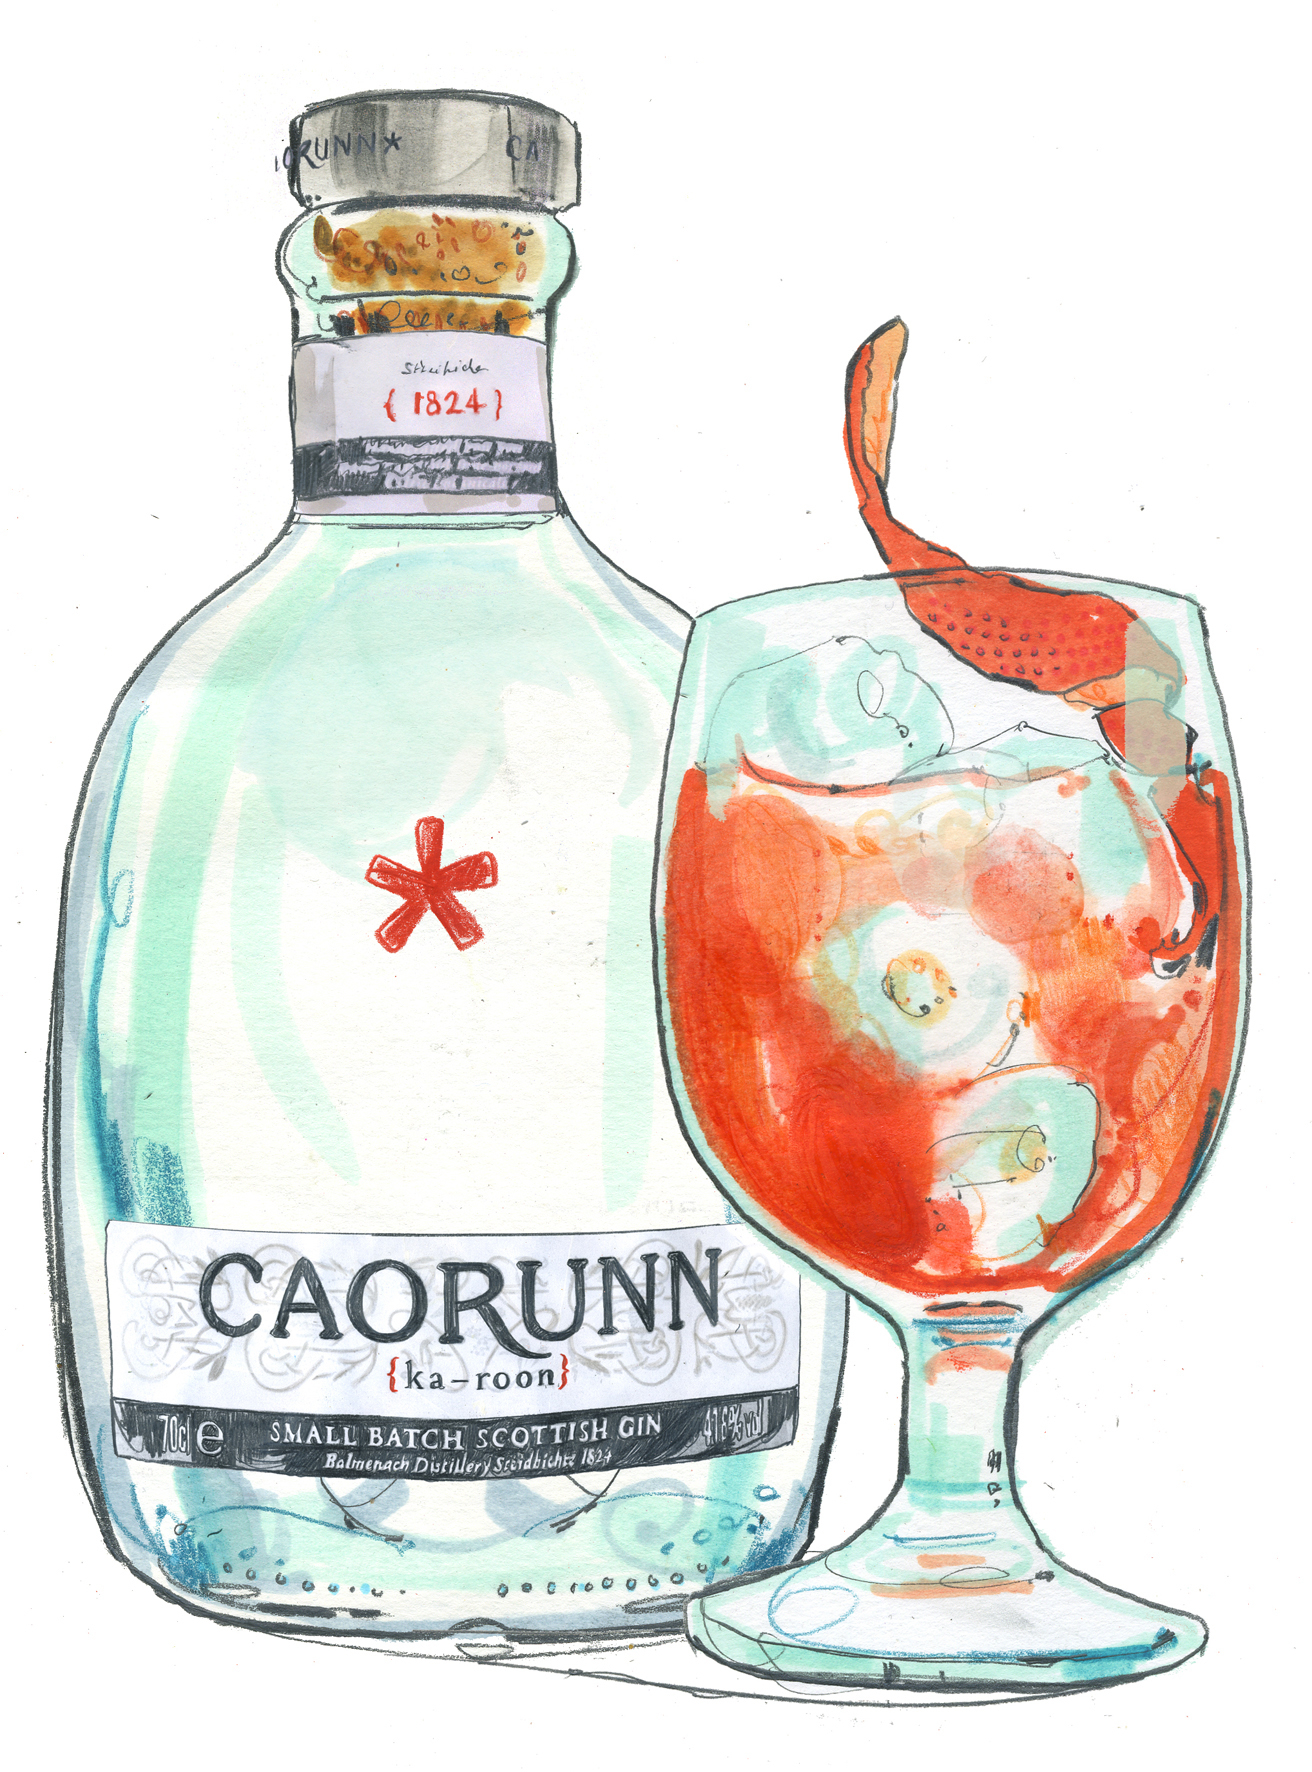 caroon gin and negroni.jpg